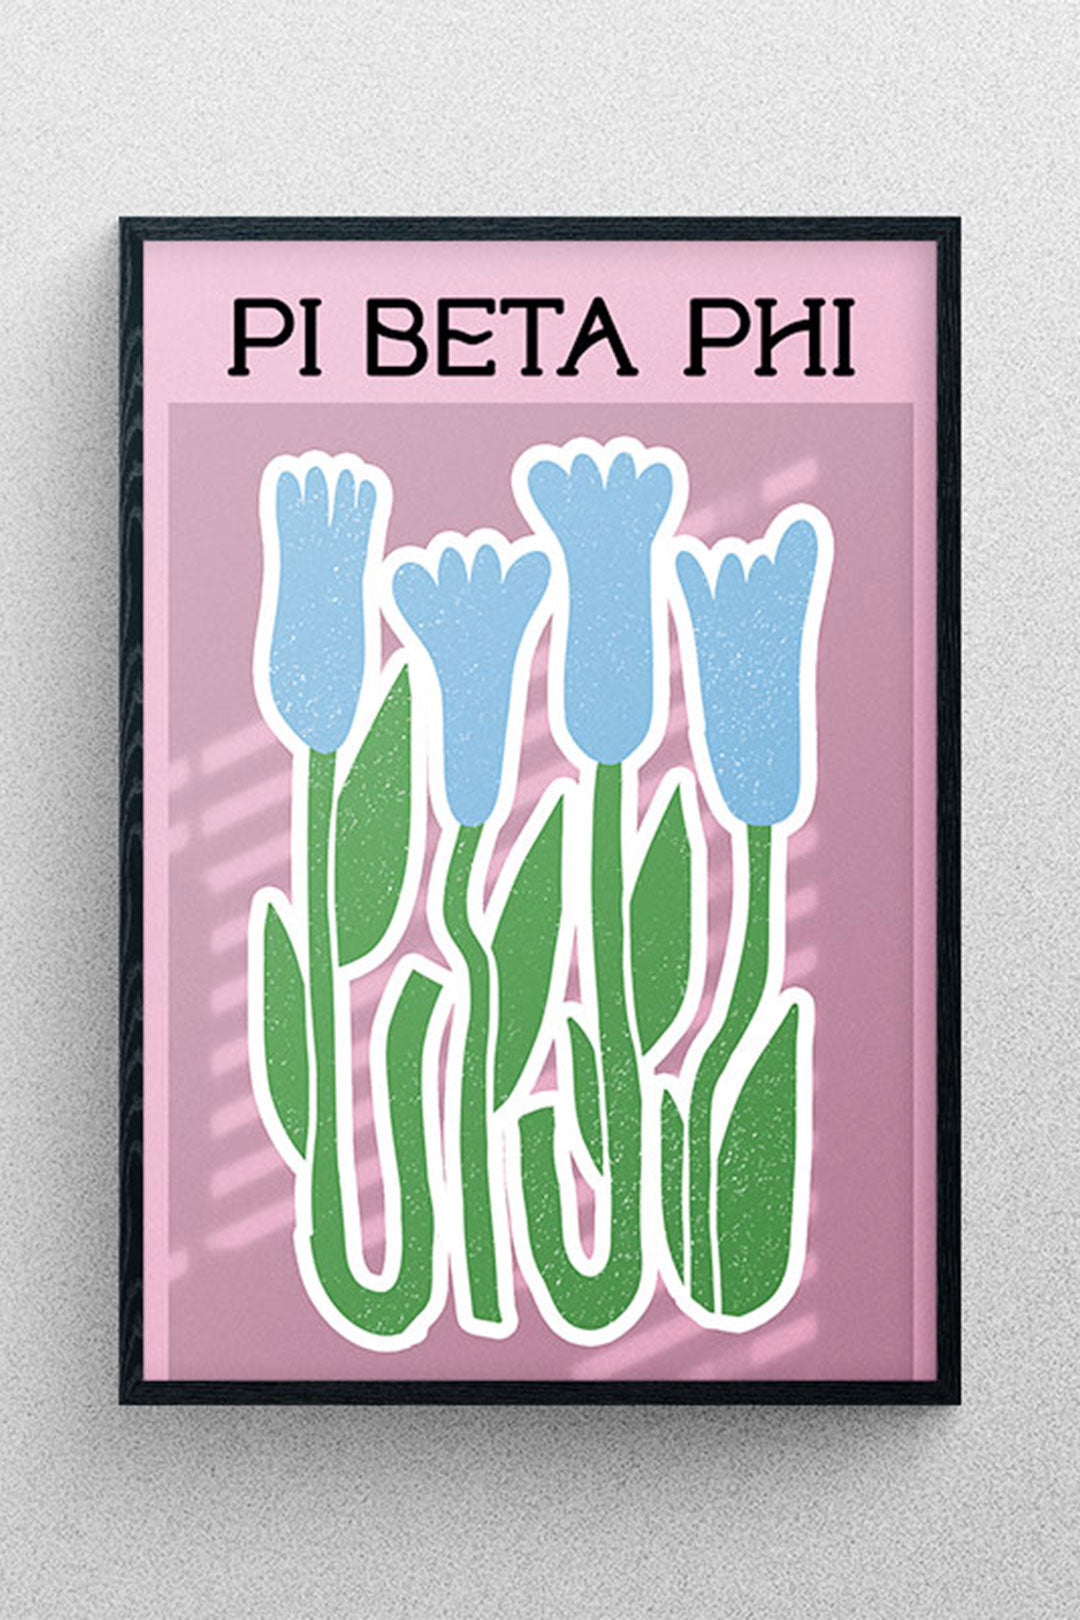 Pi Beta Phi - Art Print #18 (8.5x11)